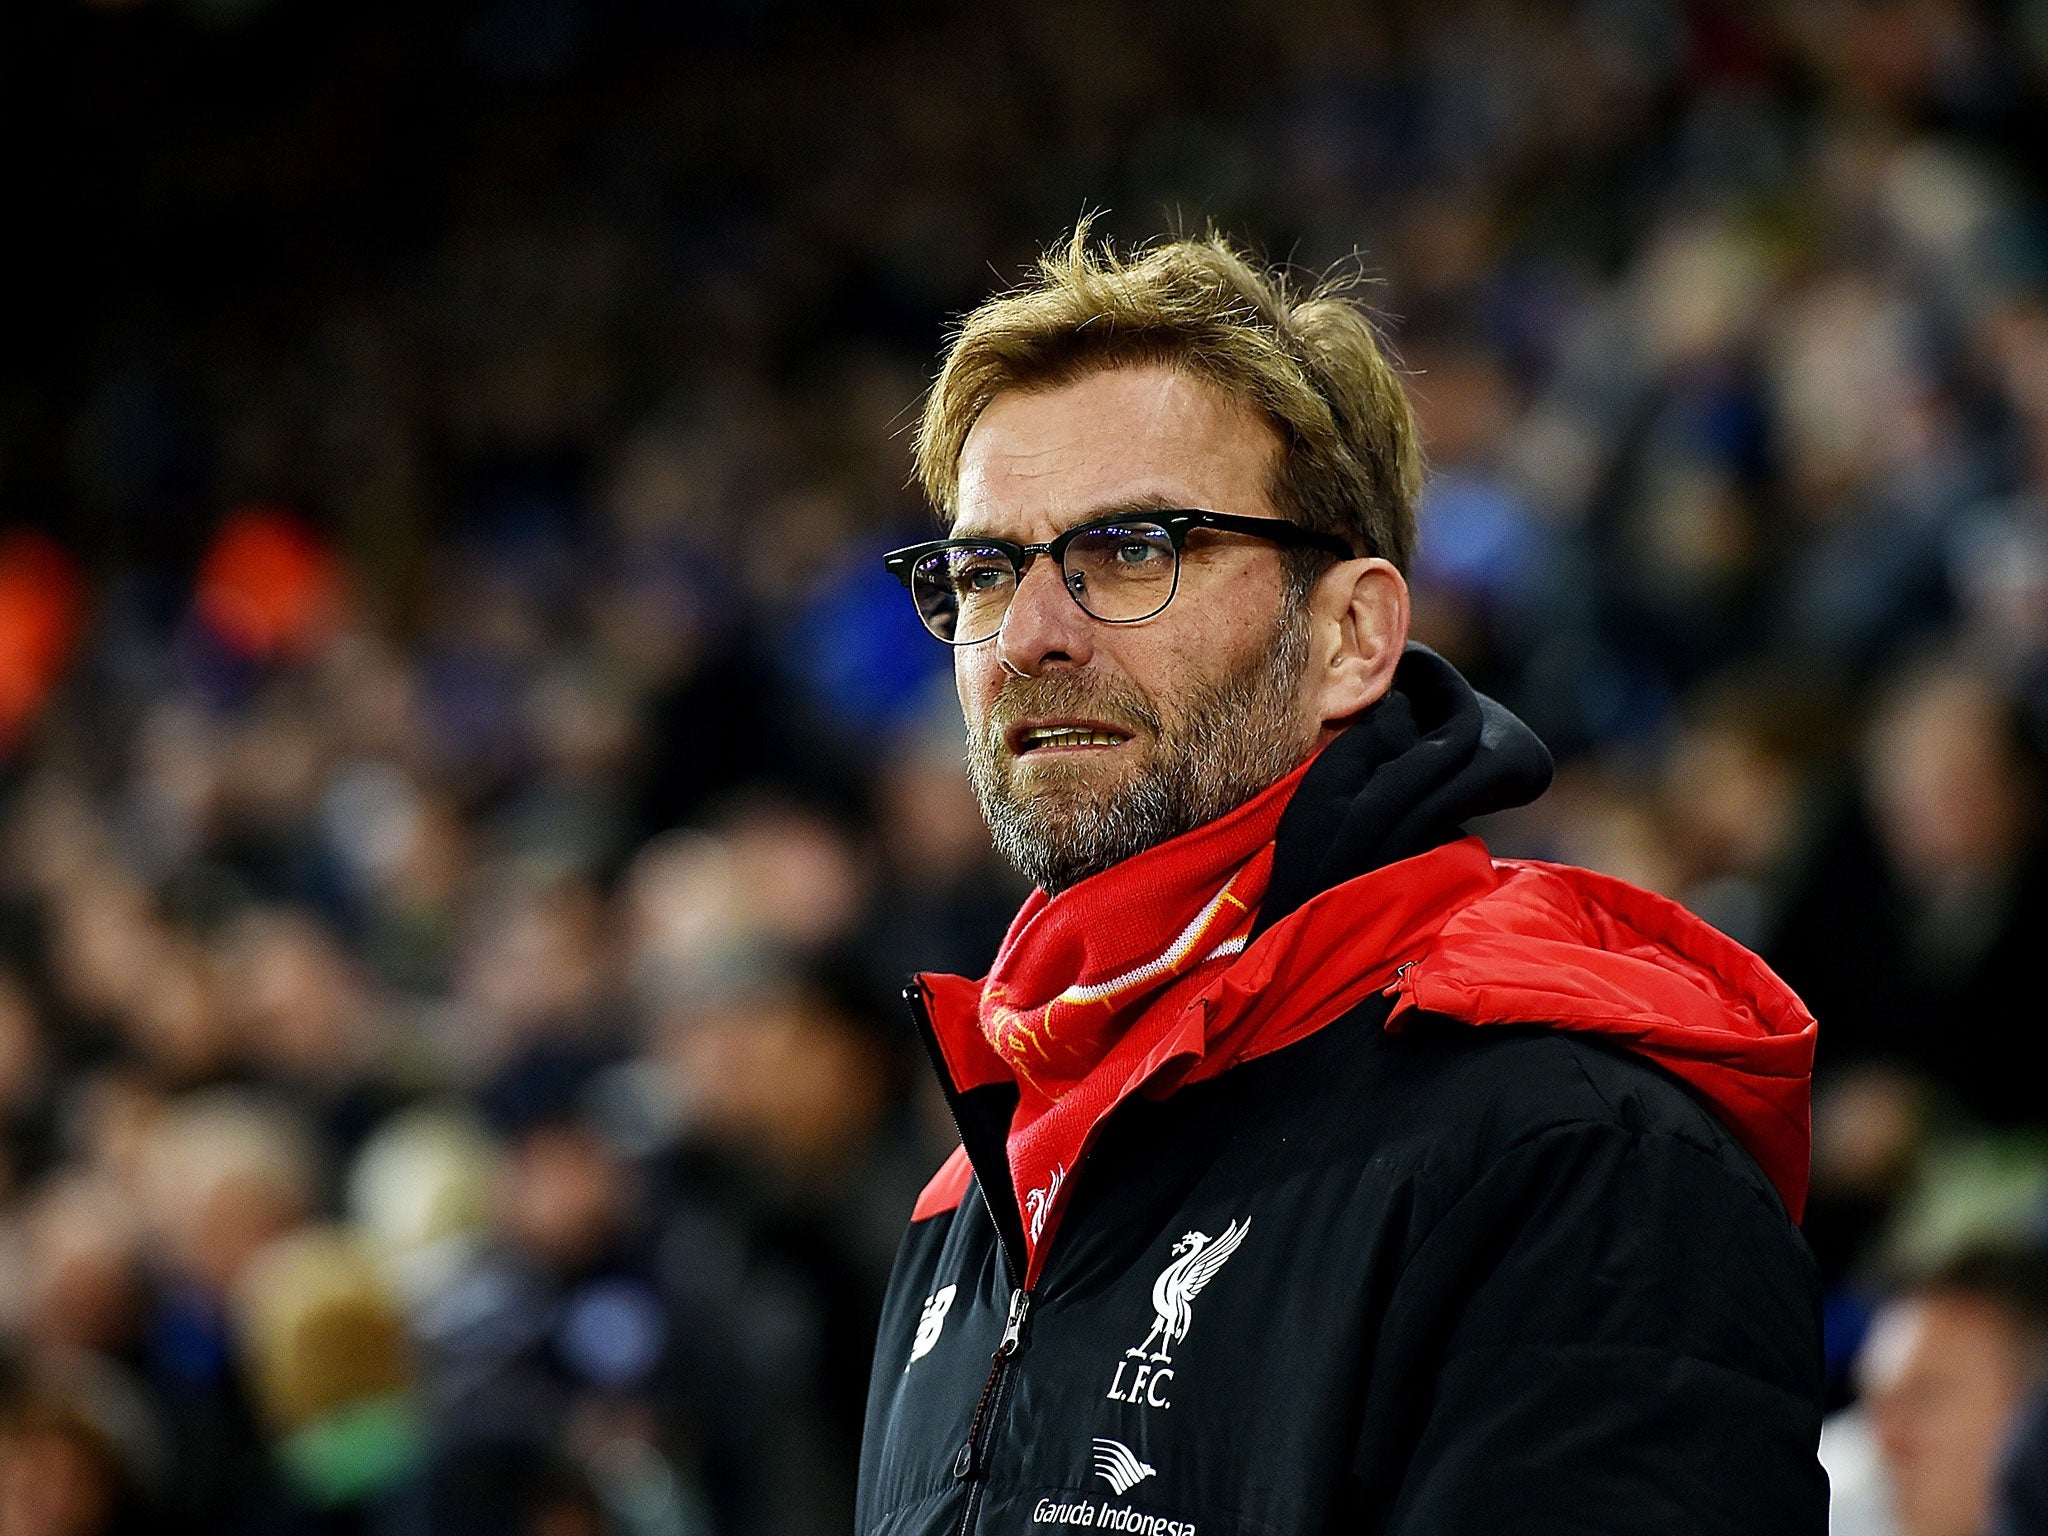 Jurgen Klopp will miss Liverpool's clash with Sunderland